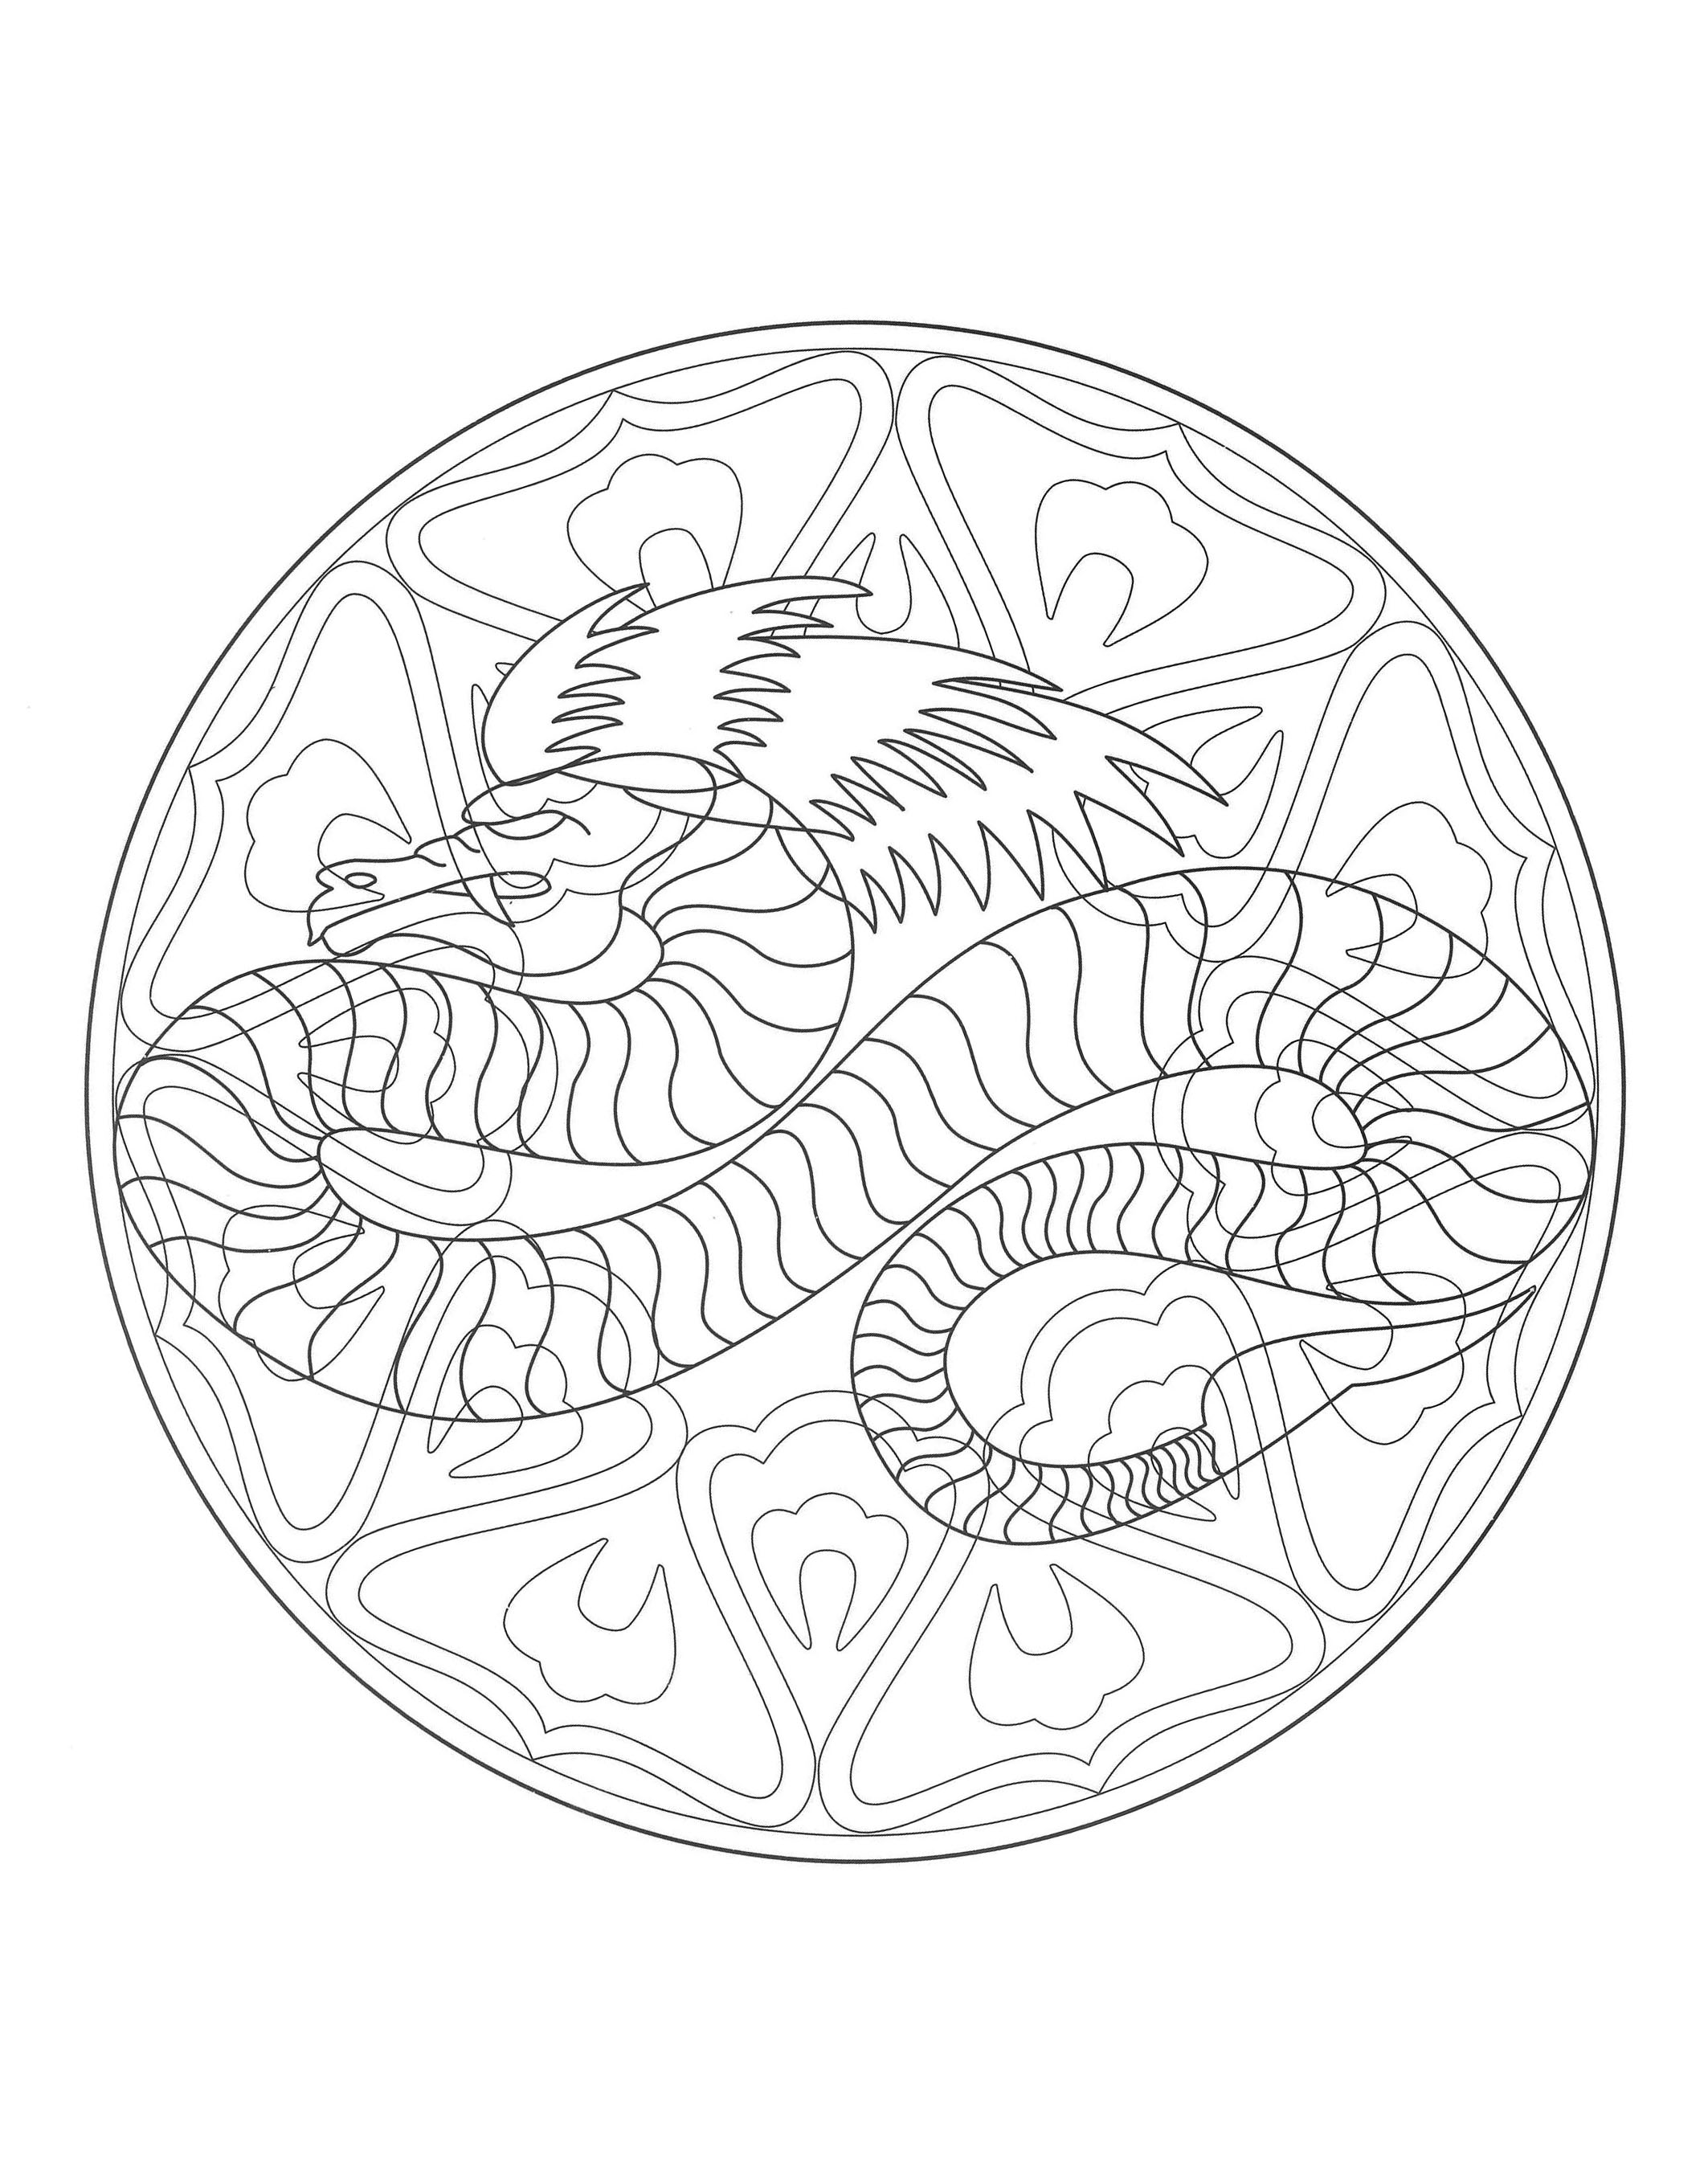 Mandala dragon - 4 - Mandalas Adult Coloring Pages